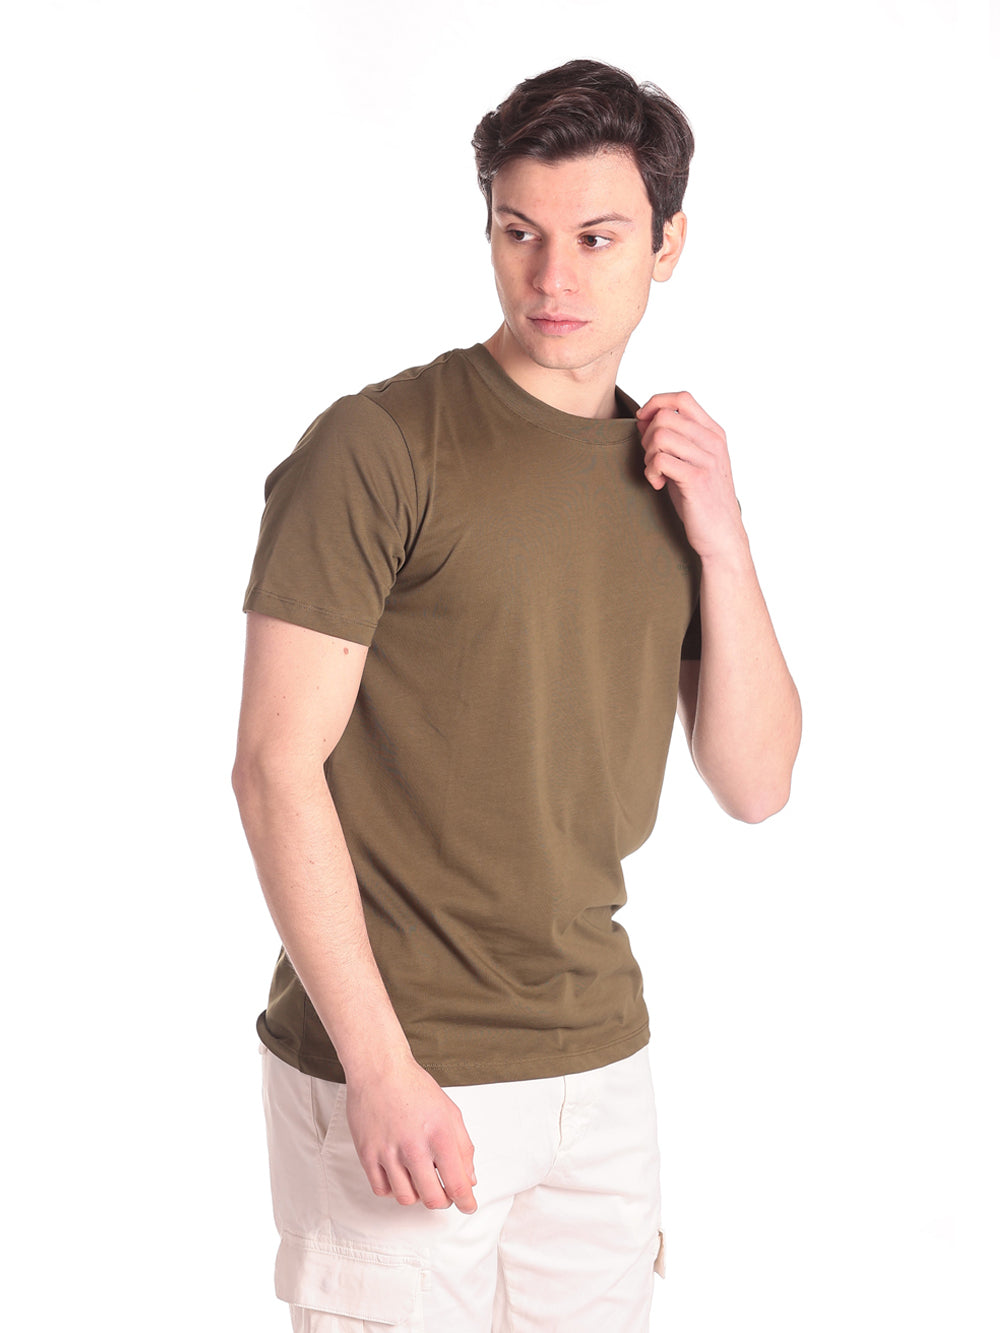 T-Shirt M123p204flamepocket Military Green